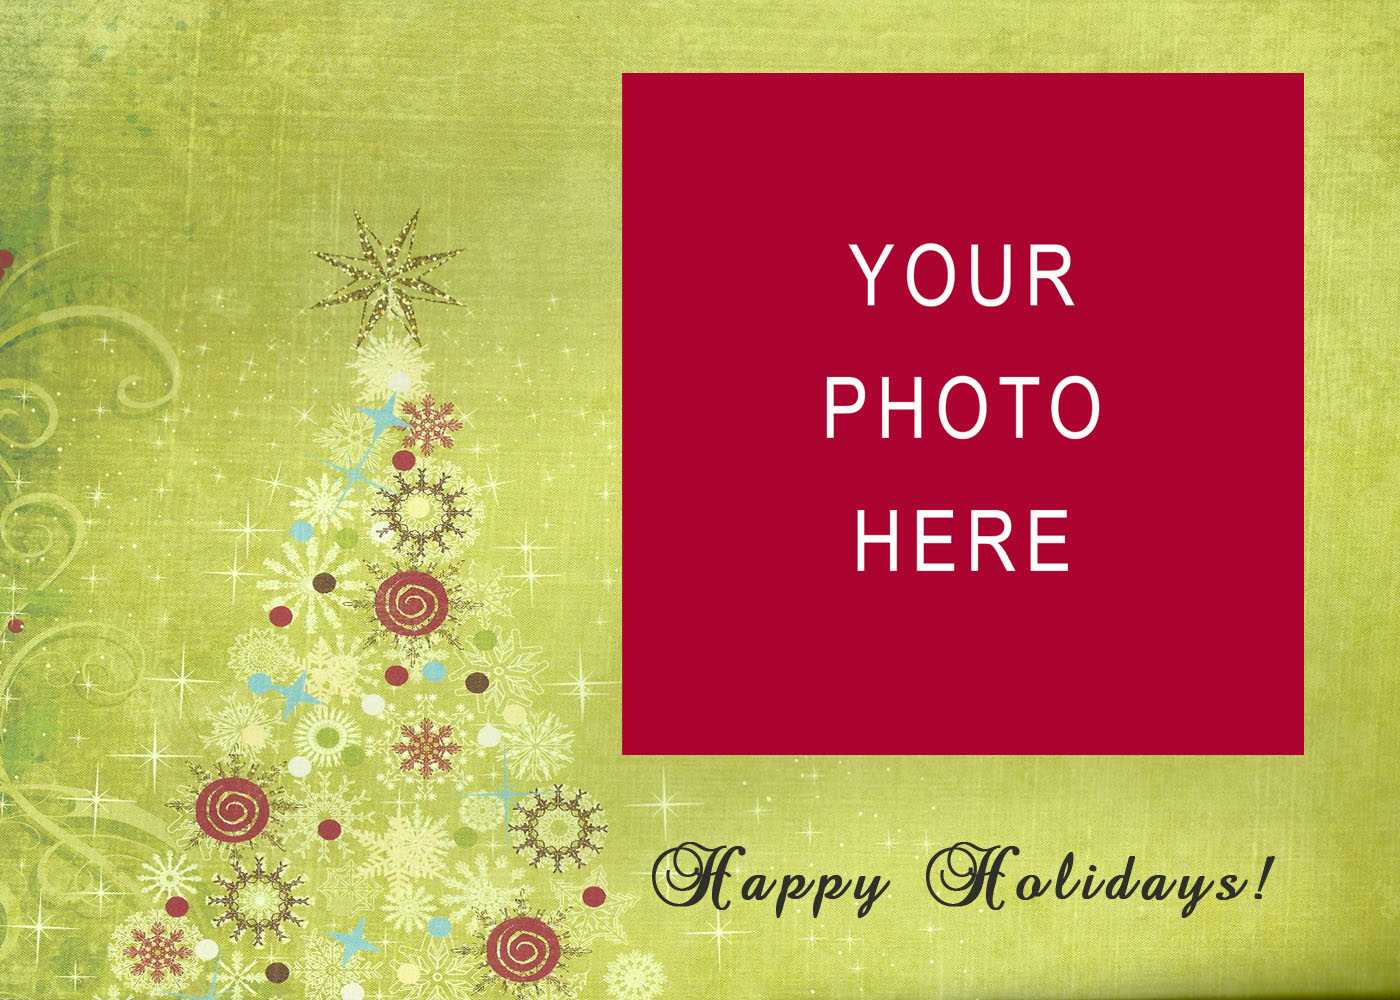 Free Christmas Card Templates | E Commercewordpress Throughout Free Christmas Card Templates For Photographers